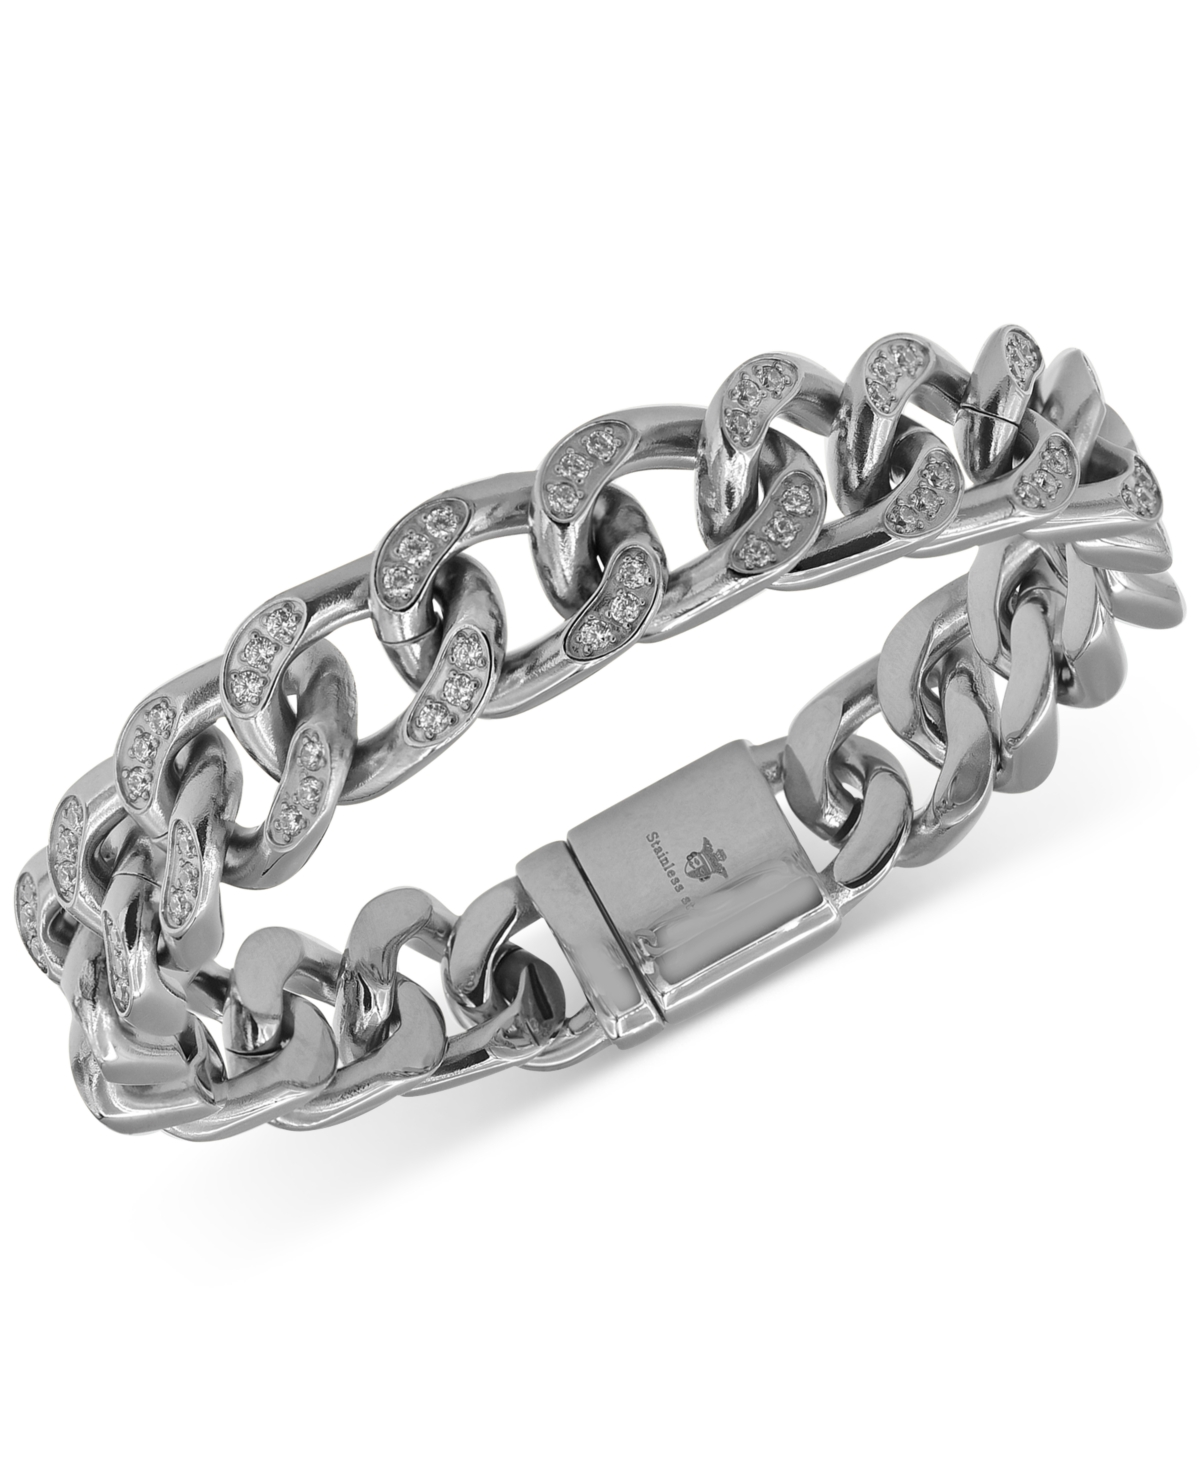 Men's Cubic Zirconia Curb Link Bracelet in Stainless Steel - Gold-Tone